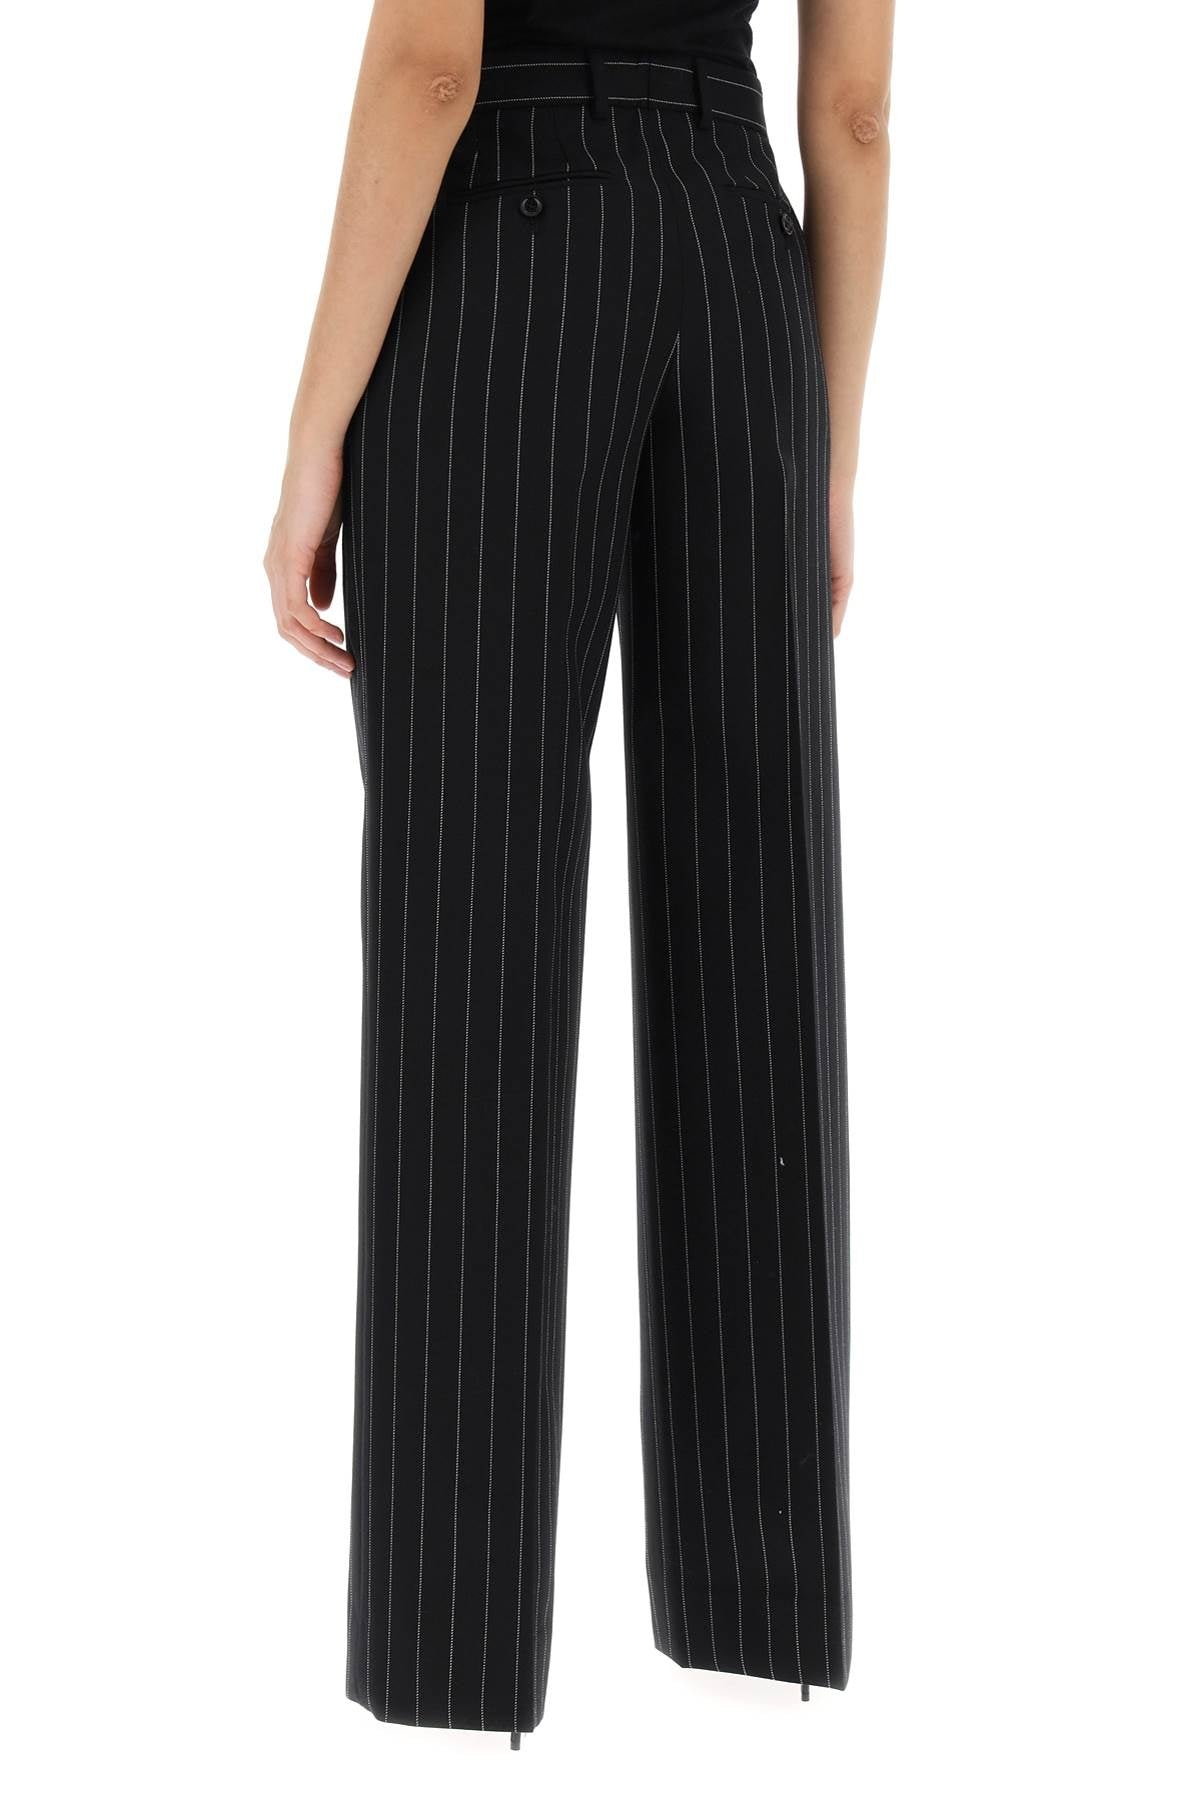 Dolce & Gabbana Striped Flare Leg Pants Women - 3